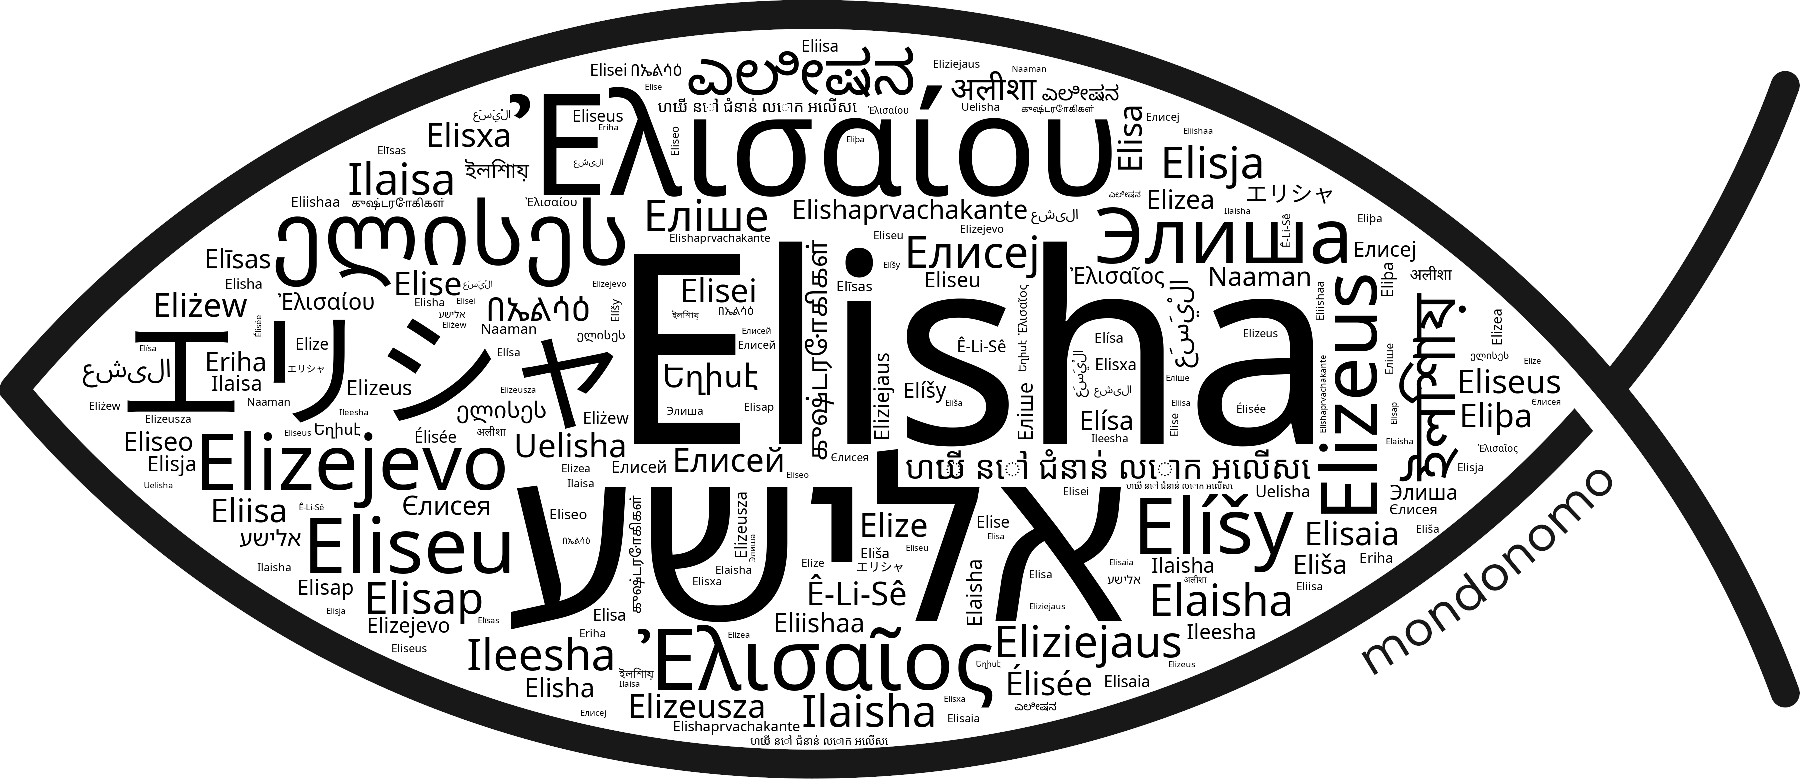 Name Elisha in the world's Bibles